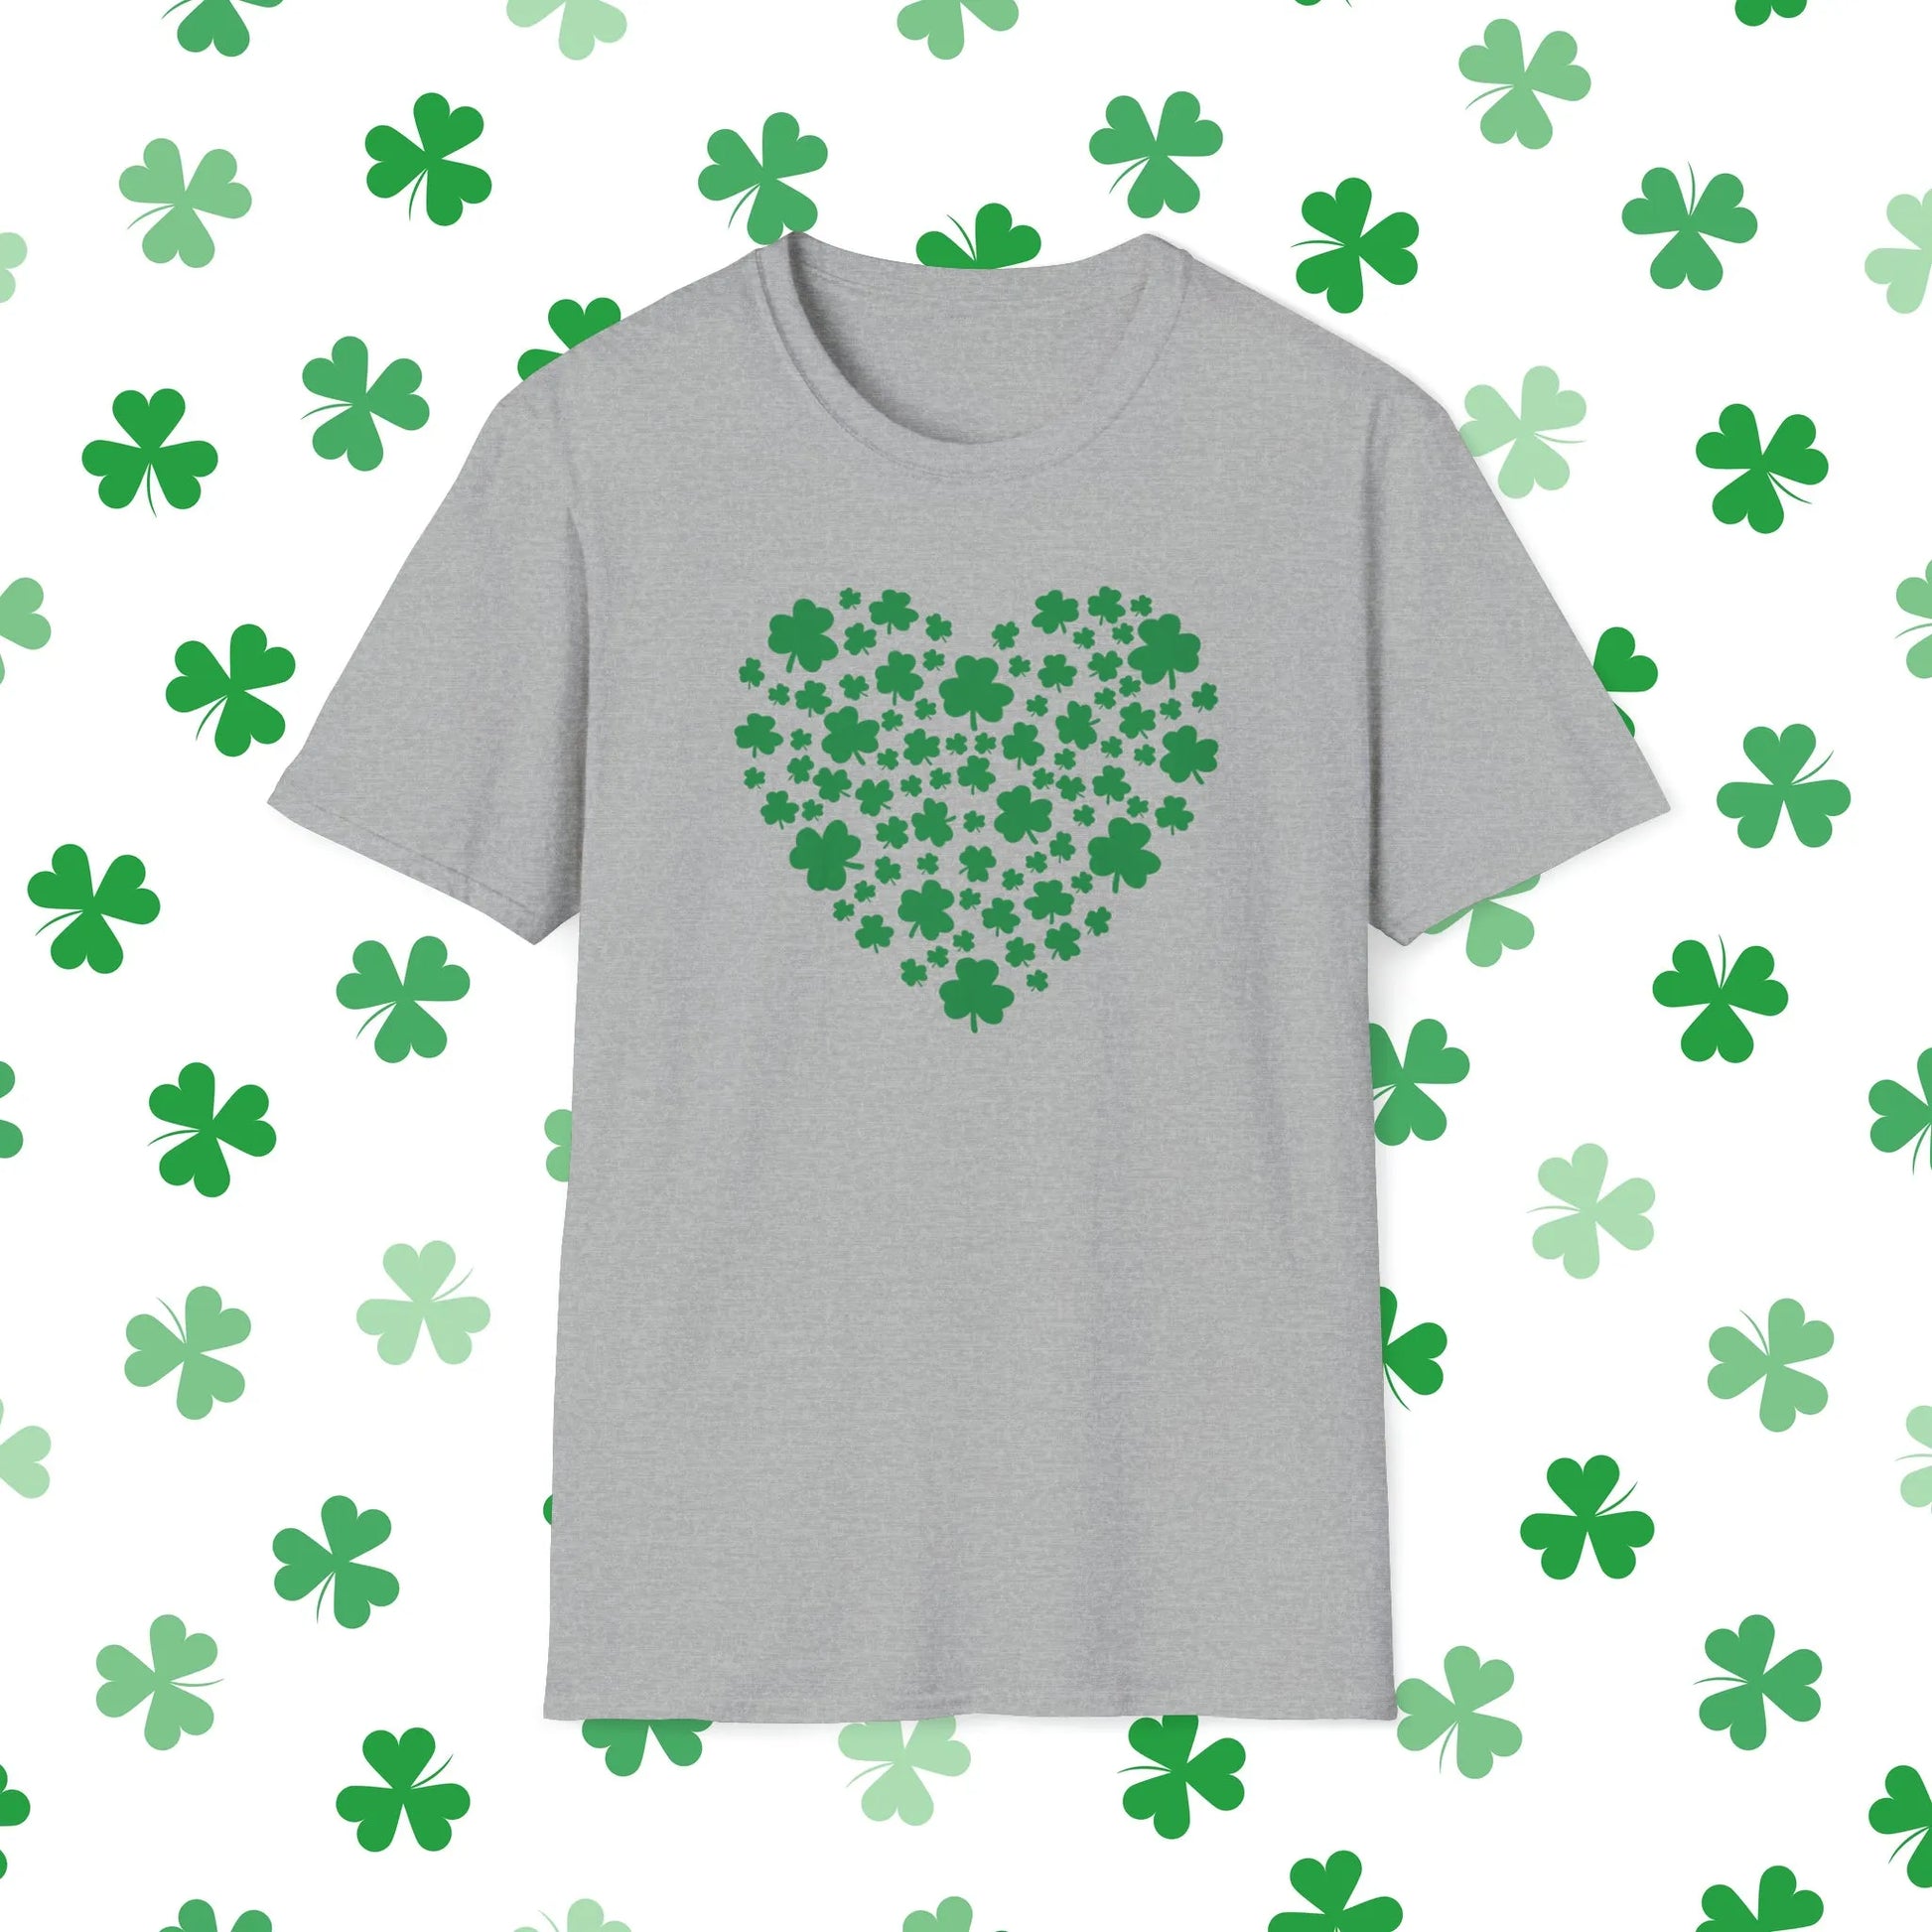 Heart of Shamrocks St. Patrick's Day T-Shirt - Comfort & Charm - Heart of Shamrocks Shirt Grey Front